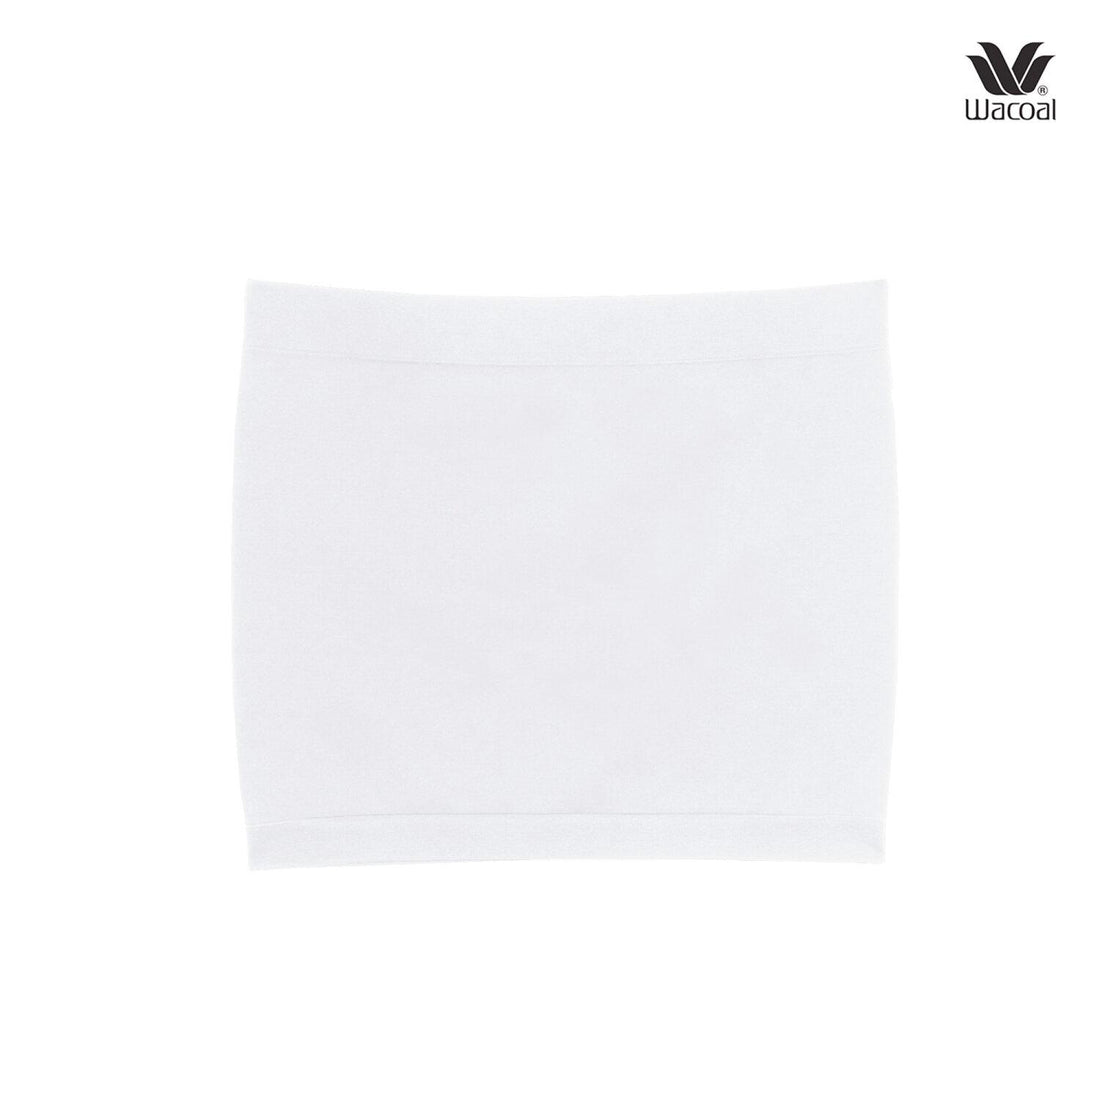 Wacoal Lingerie Strapless bra, soft, seamless, model WH9792, white (WH)